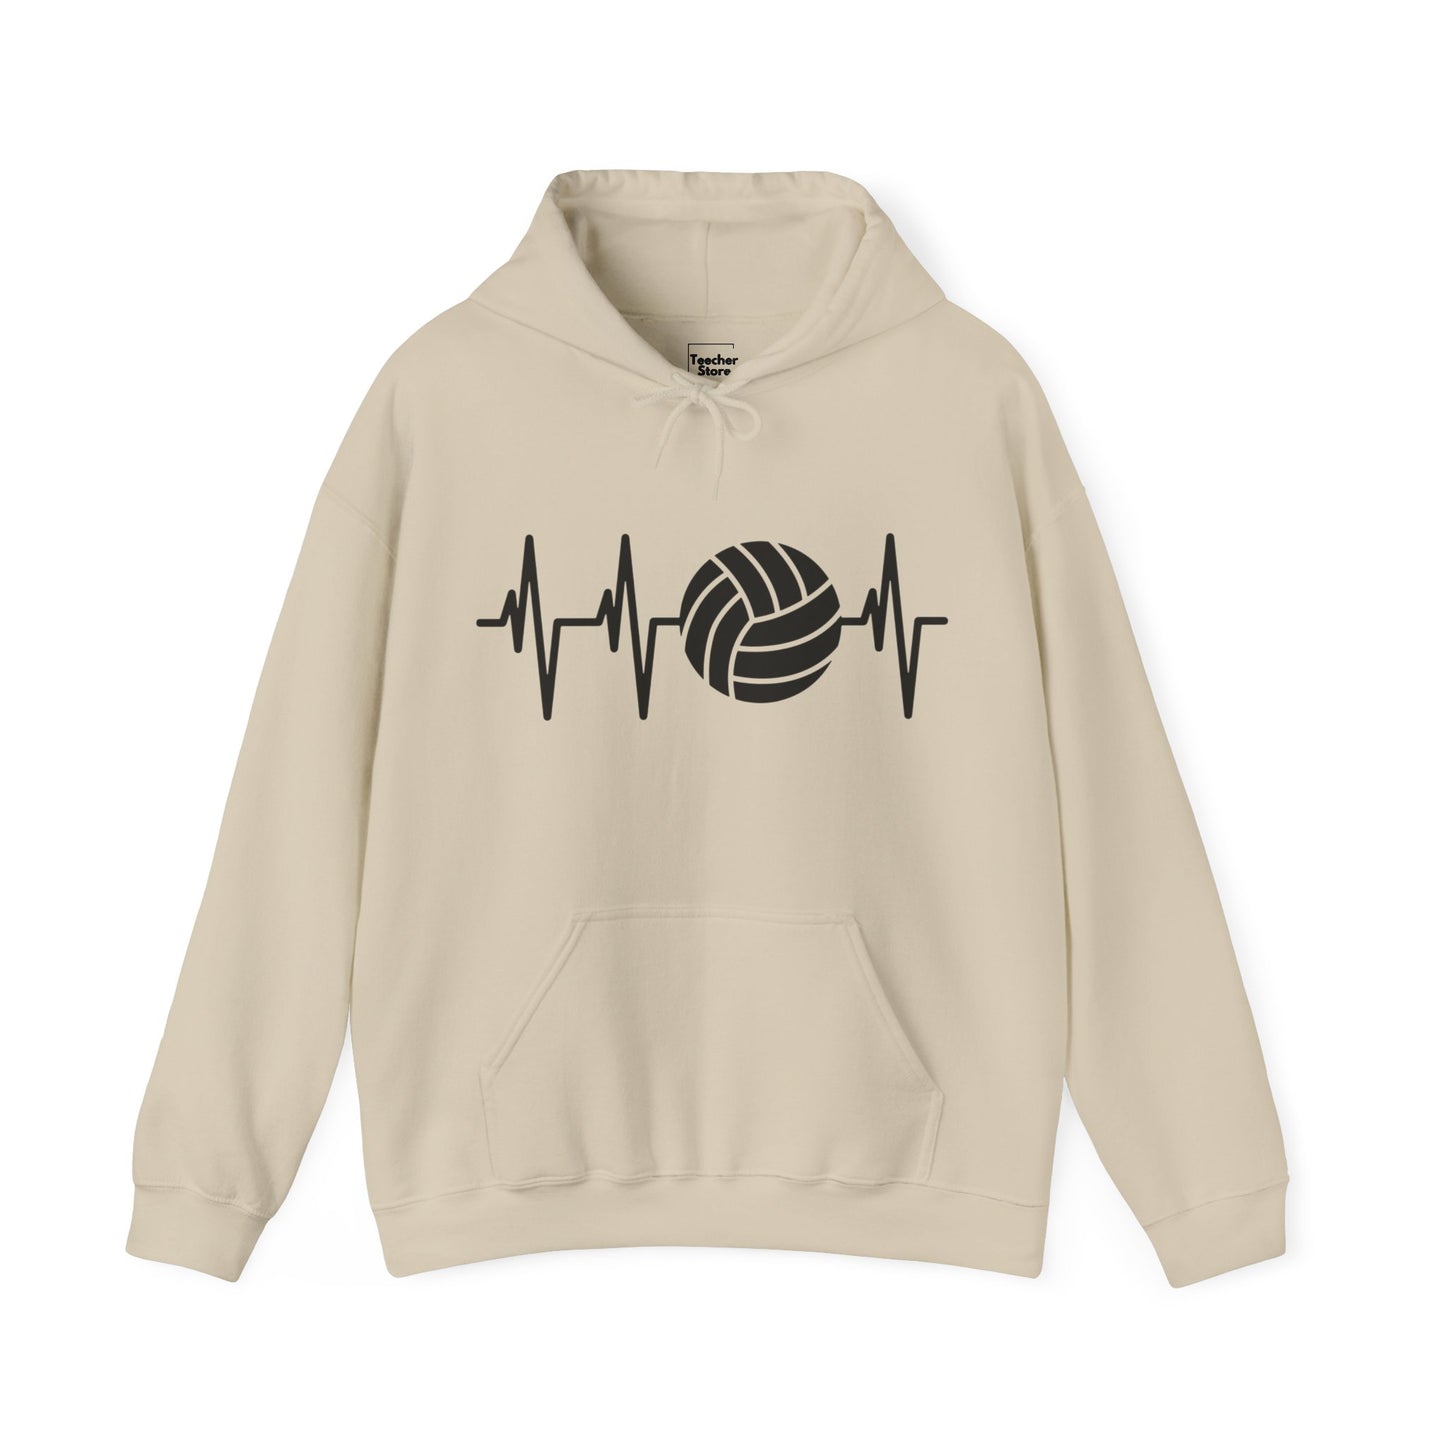 Volleyball Heartbeat Hooded Sweatshirt